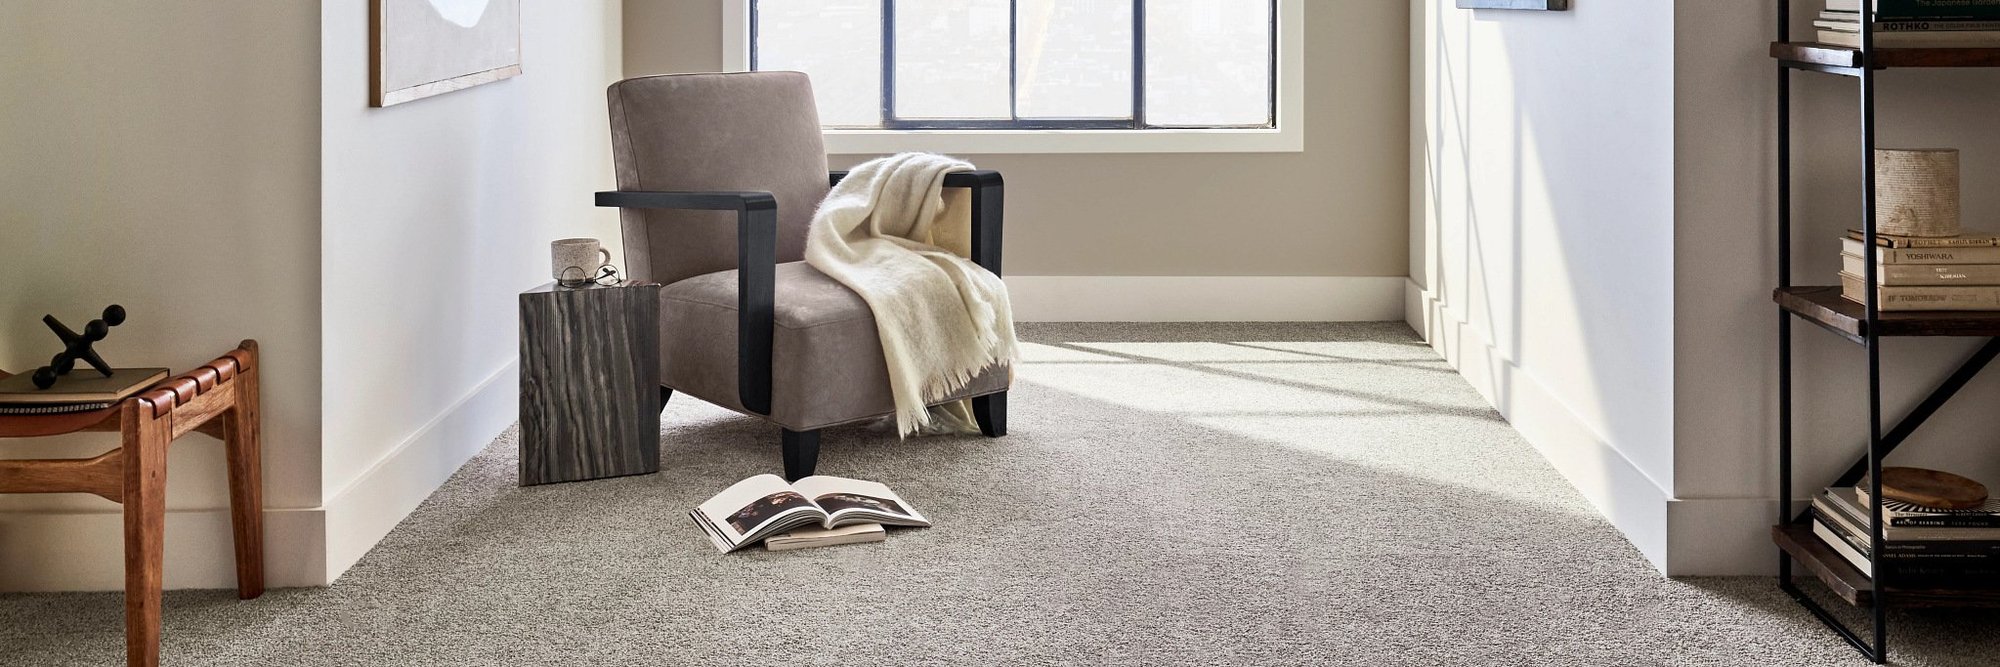 armchair on carpet living room - Rickway Carpet in MN